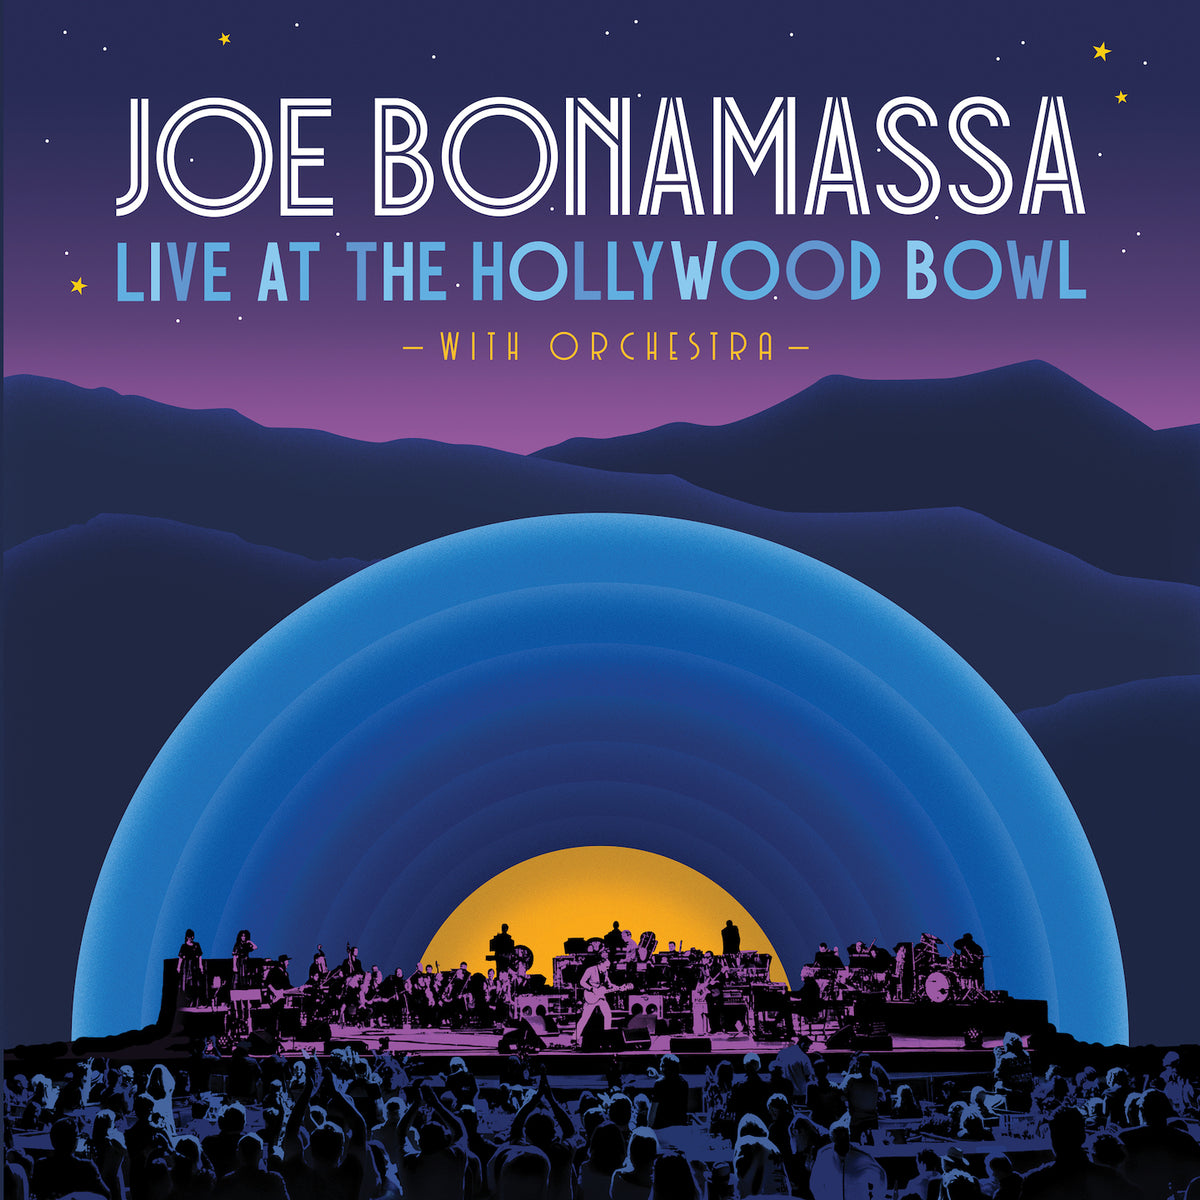 Ball Peen Hammer (Live at the Hollywood Bowl with Orchestra) - Joe Bonamassa - Single